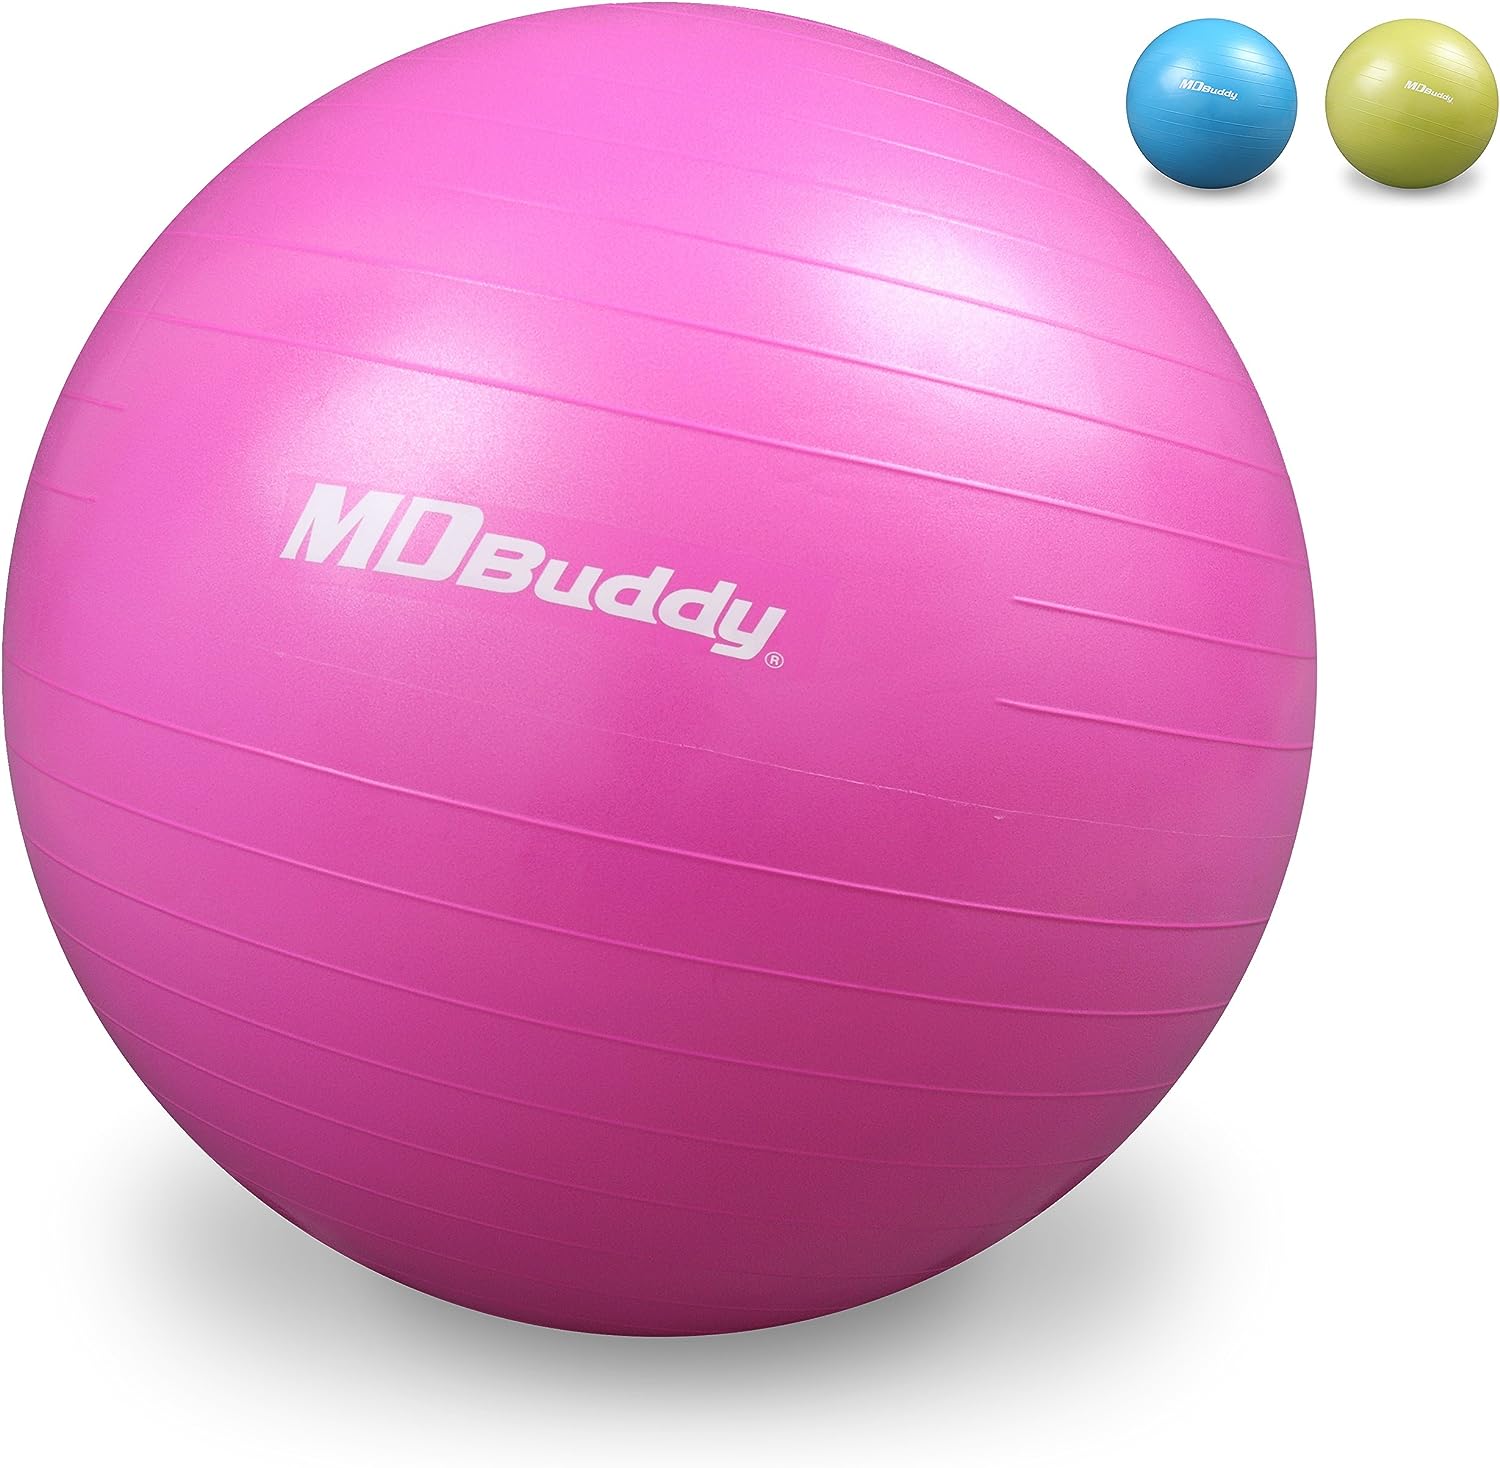 Gymball with Hand Pump 55,65,75 MDBuddy